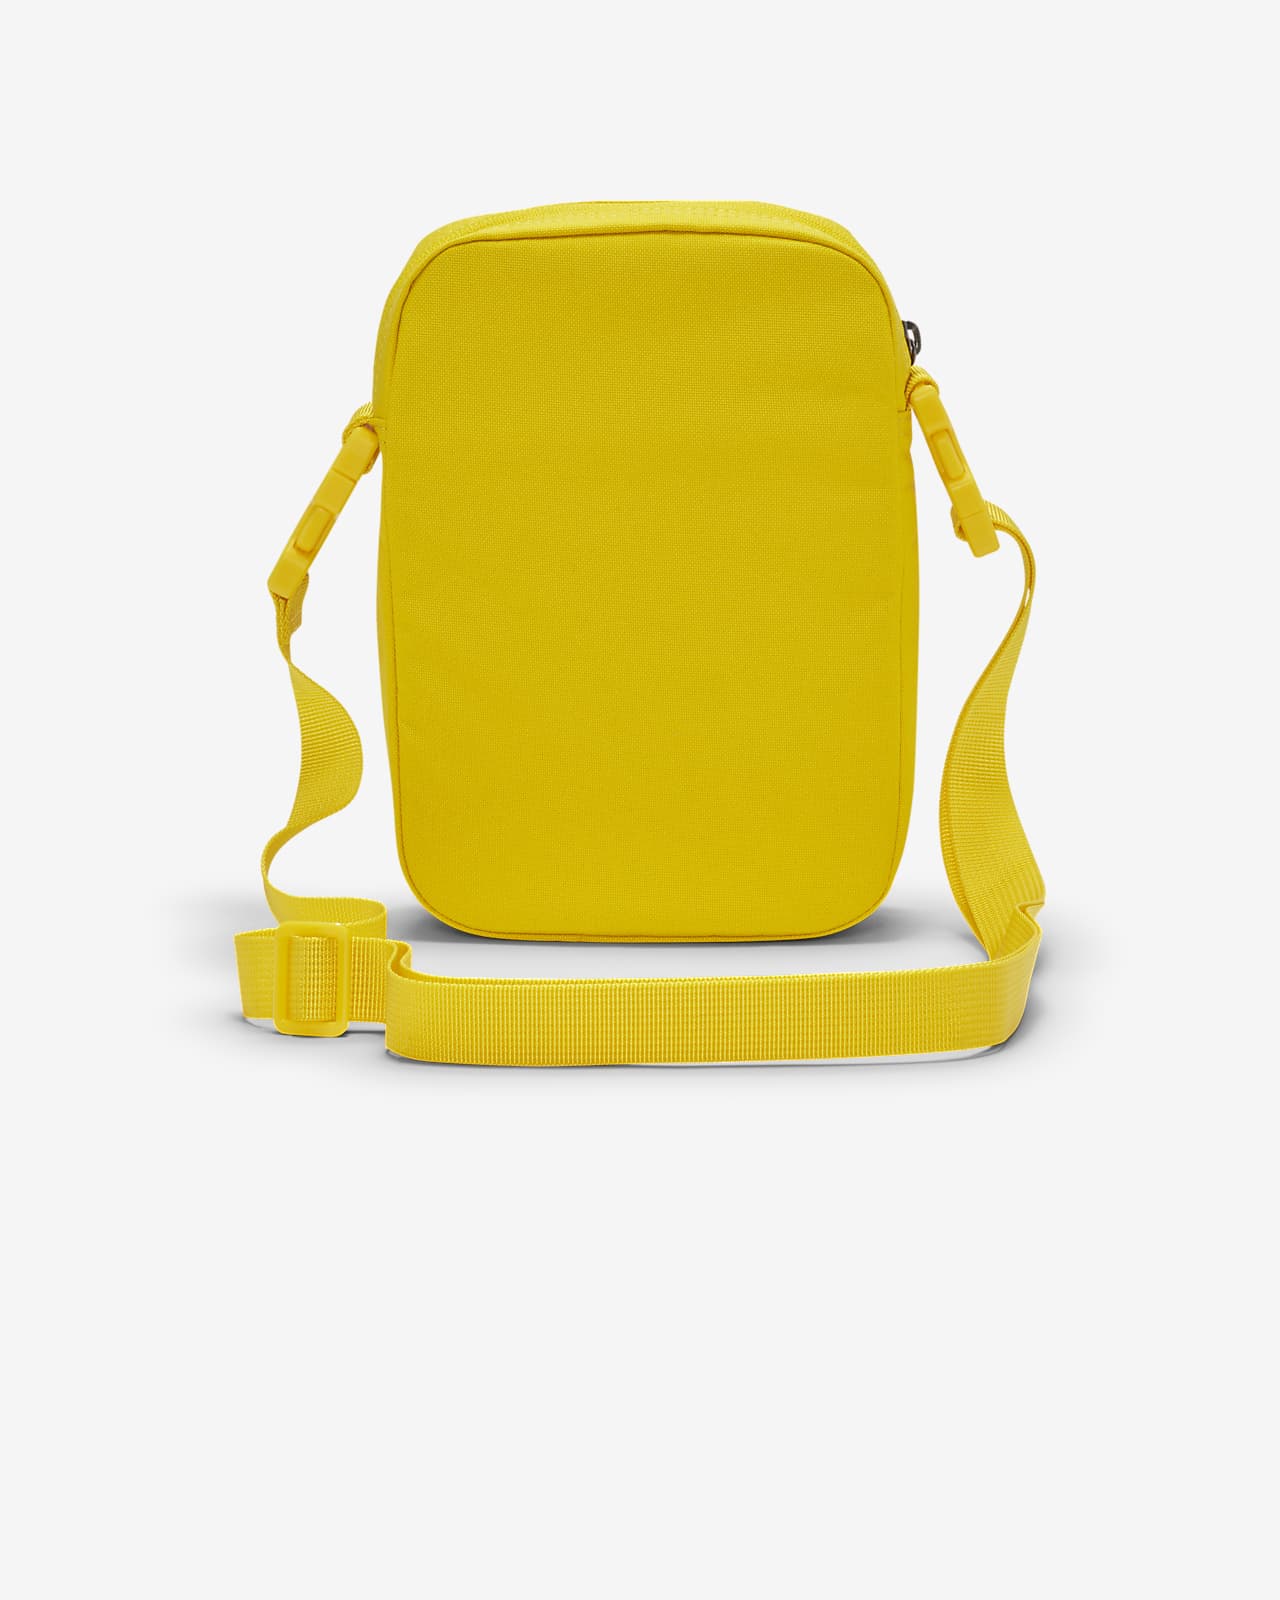 yellow nike crossbody bag